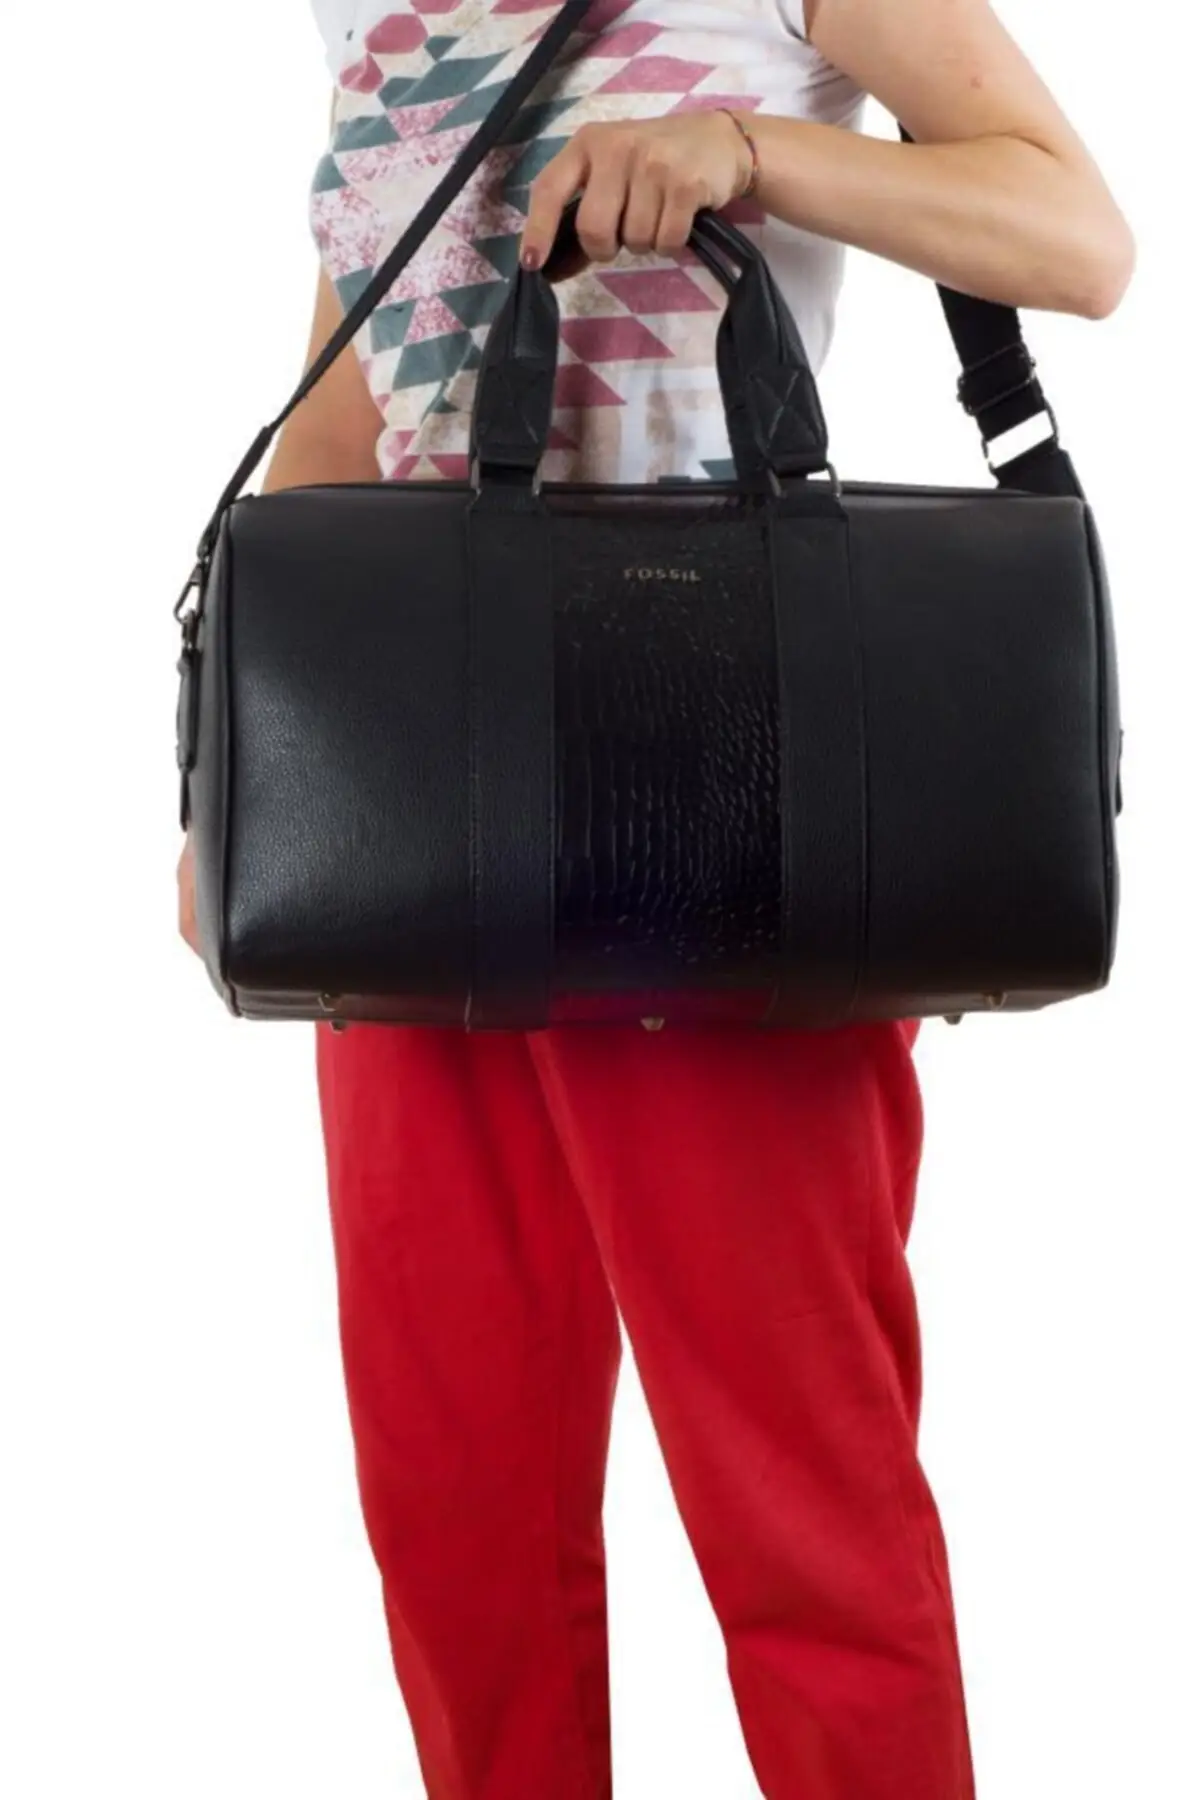 Men Women Travel Bag Soft Leather Carrying Hand Luggage Bags Large Travel Shoulder Bag Male Luggage bag